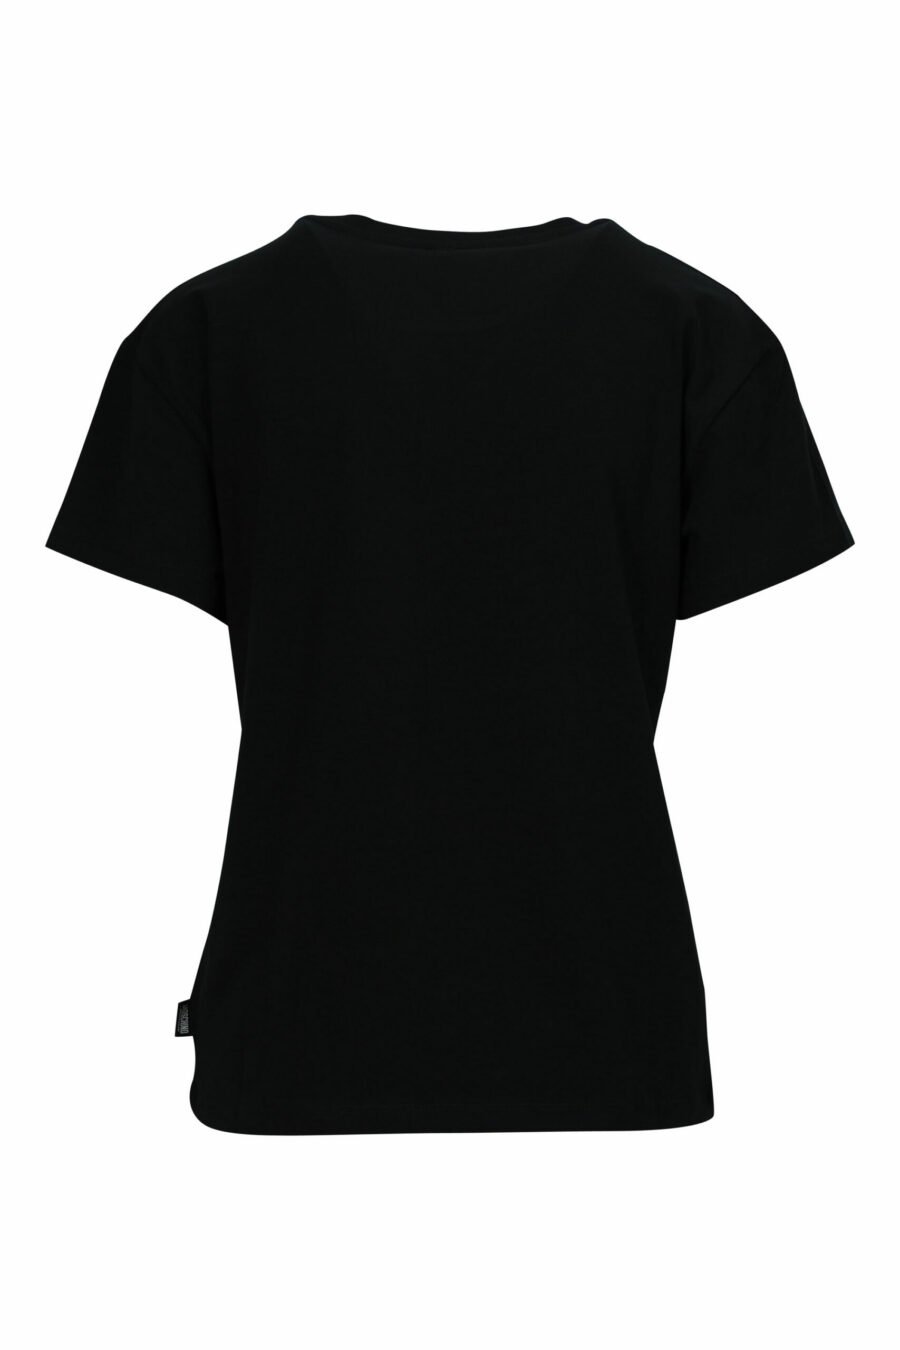 Black oversize T-shirt with bear logo "underbear" patch - 667113697666 1 scaled